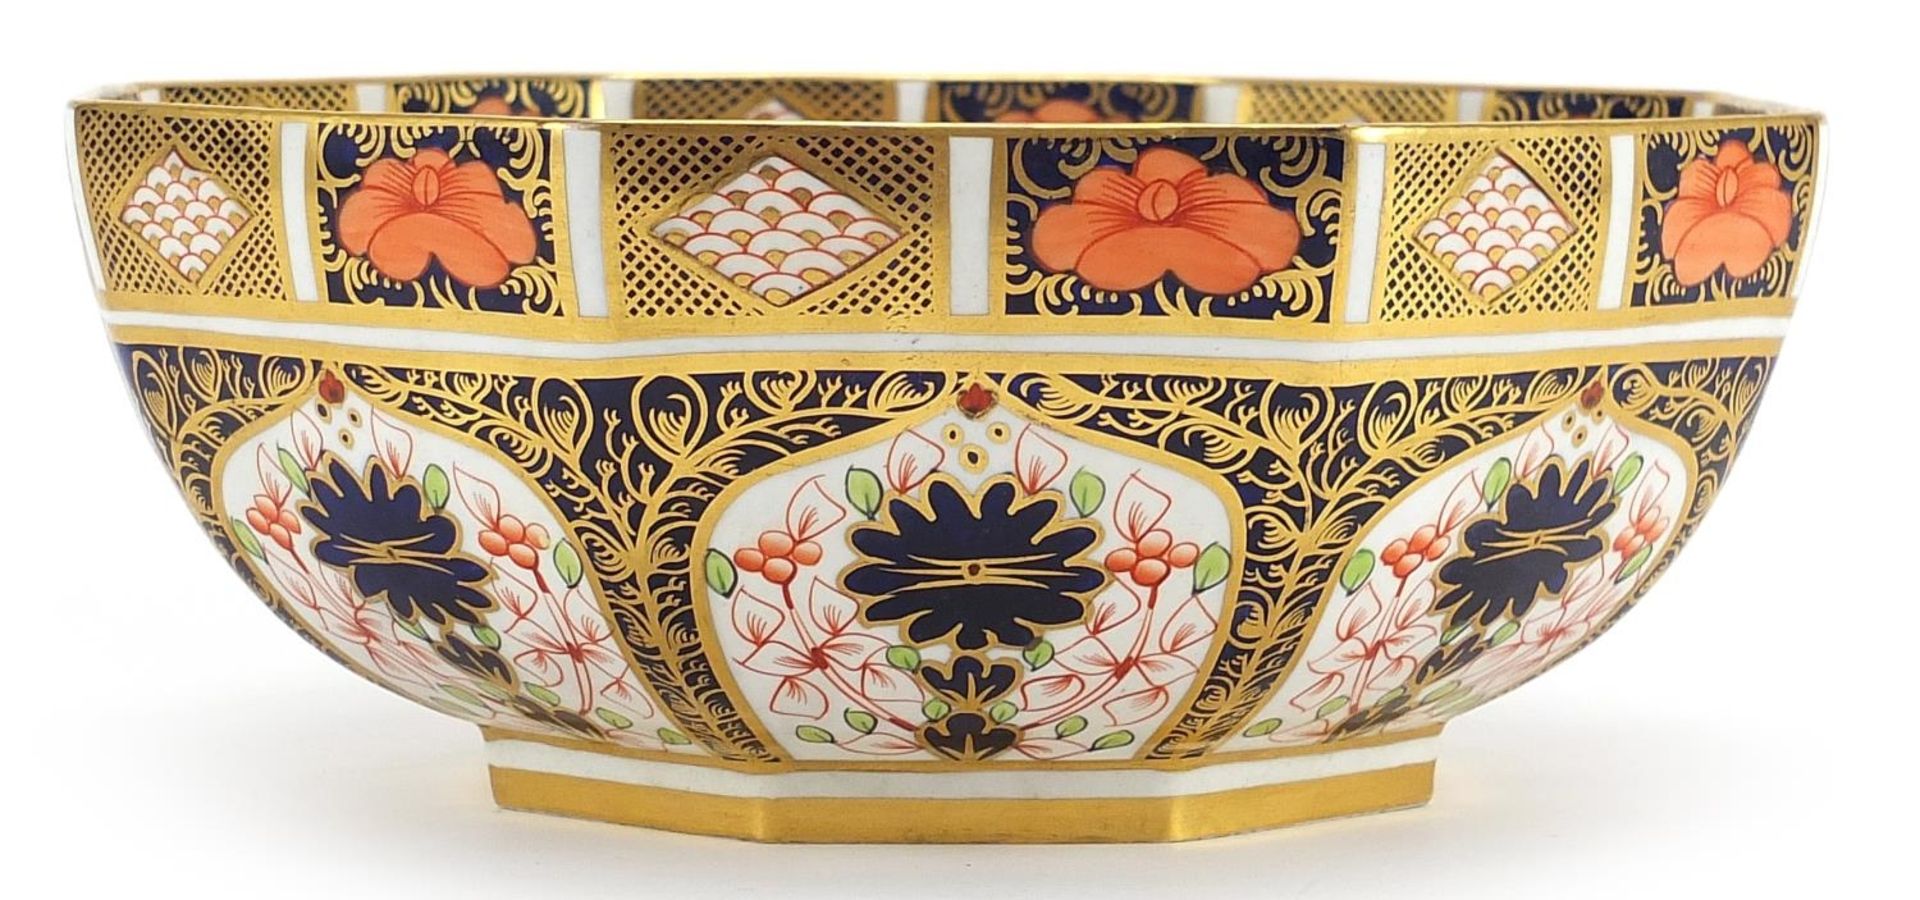 Royal Crown Derby Imari porcelain octagonal fruit bowl, 24cm in diameter